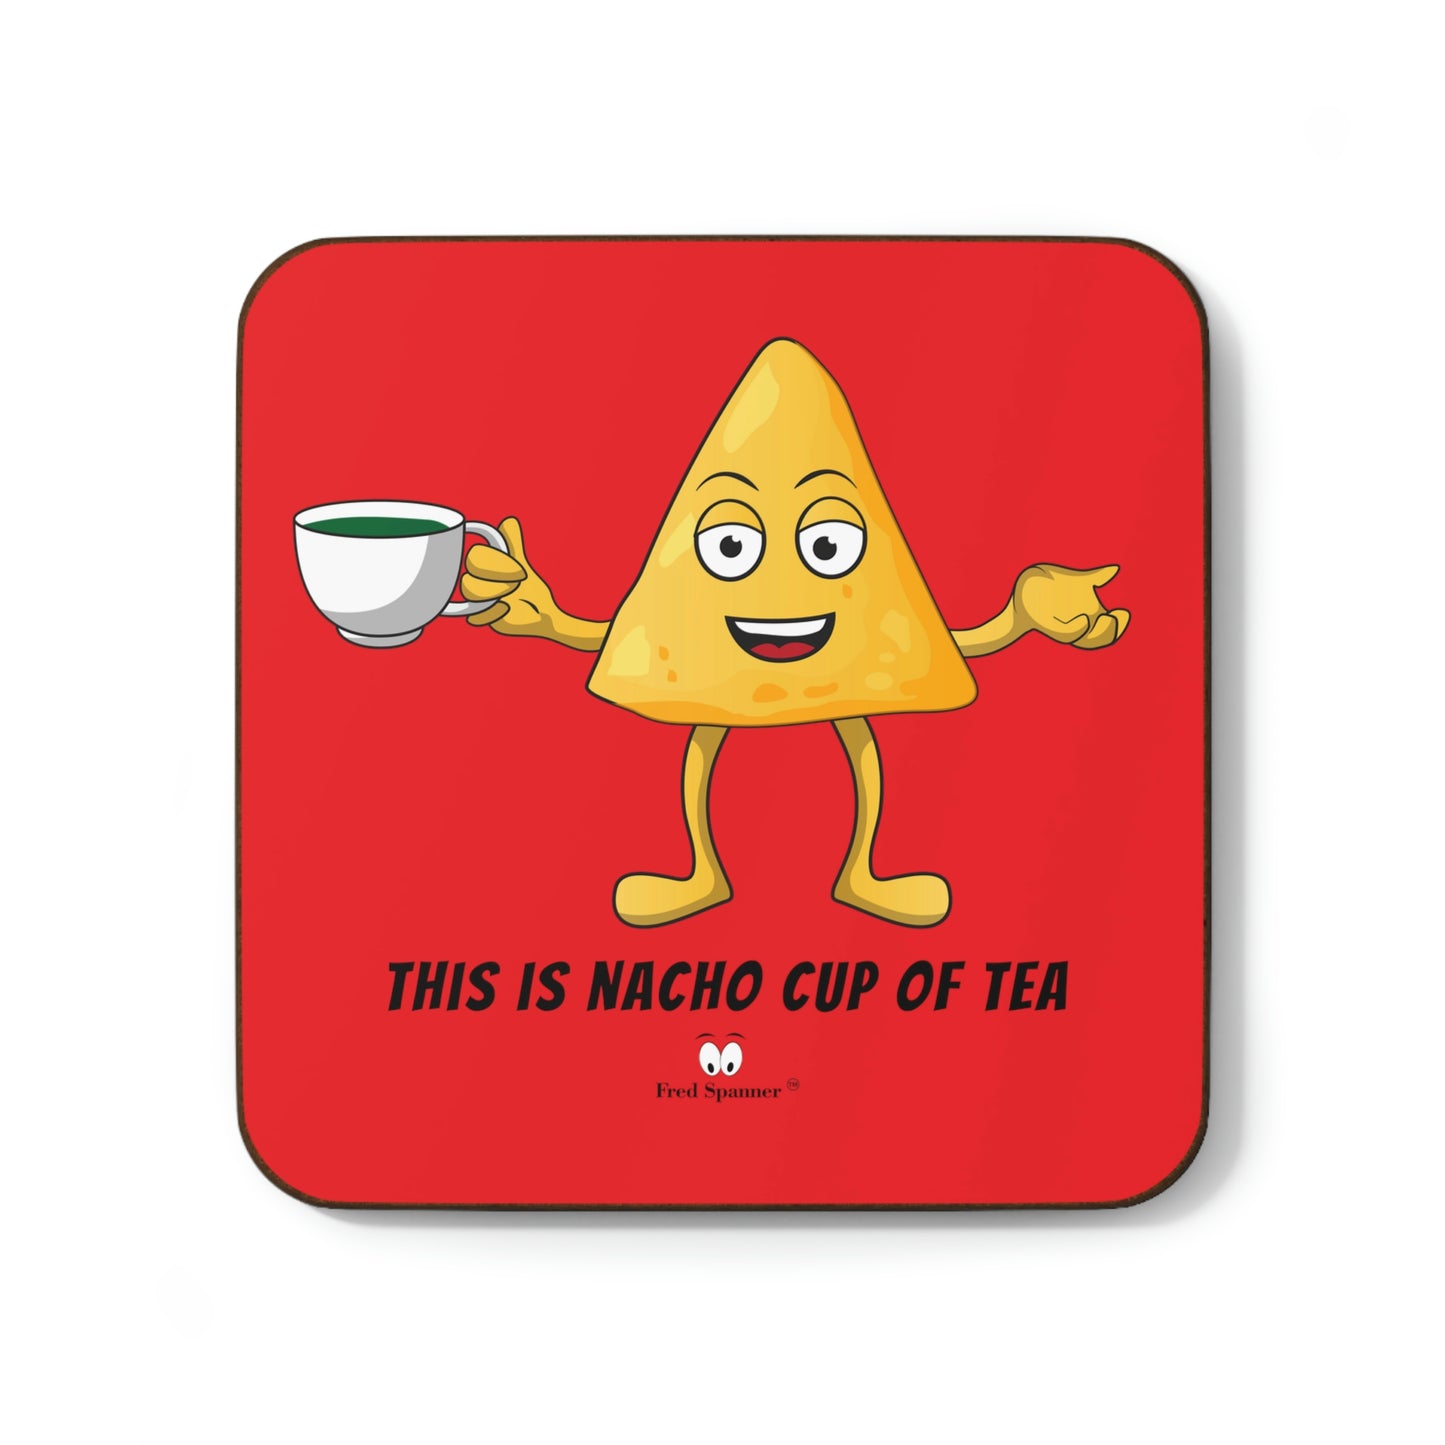 This is nacho cup of tea- Hardboard Back Coaster